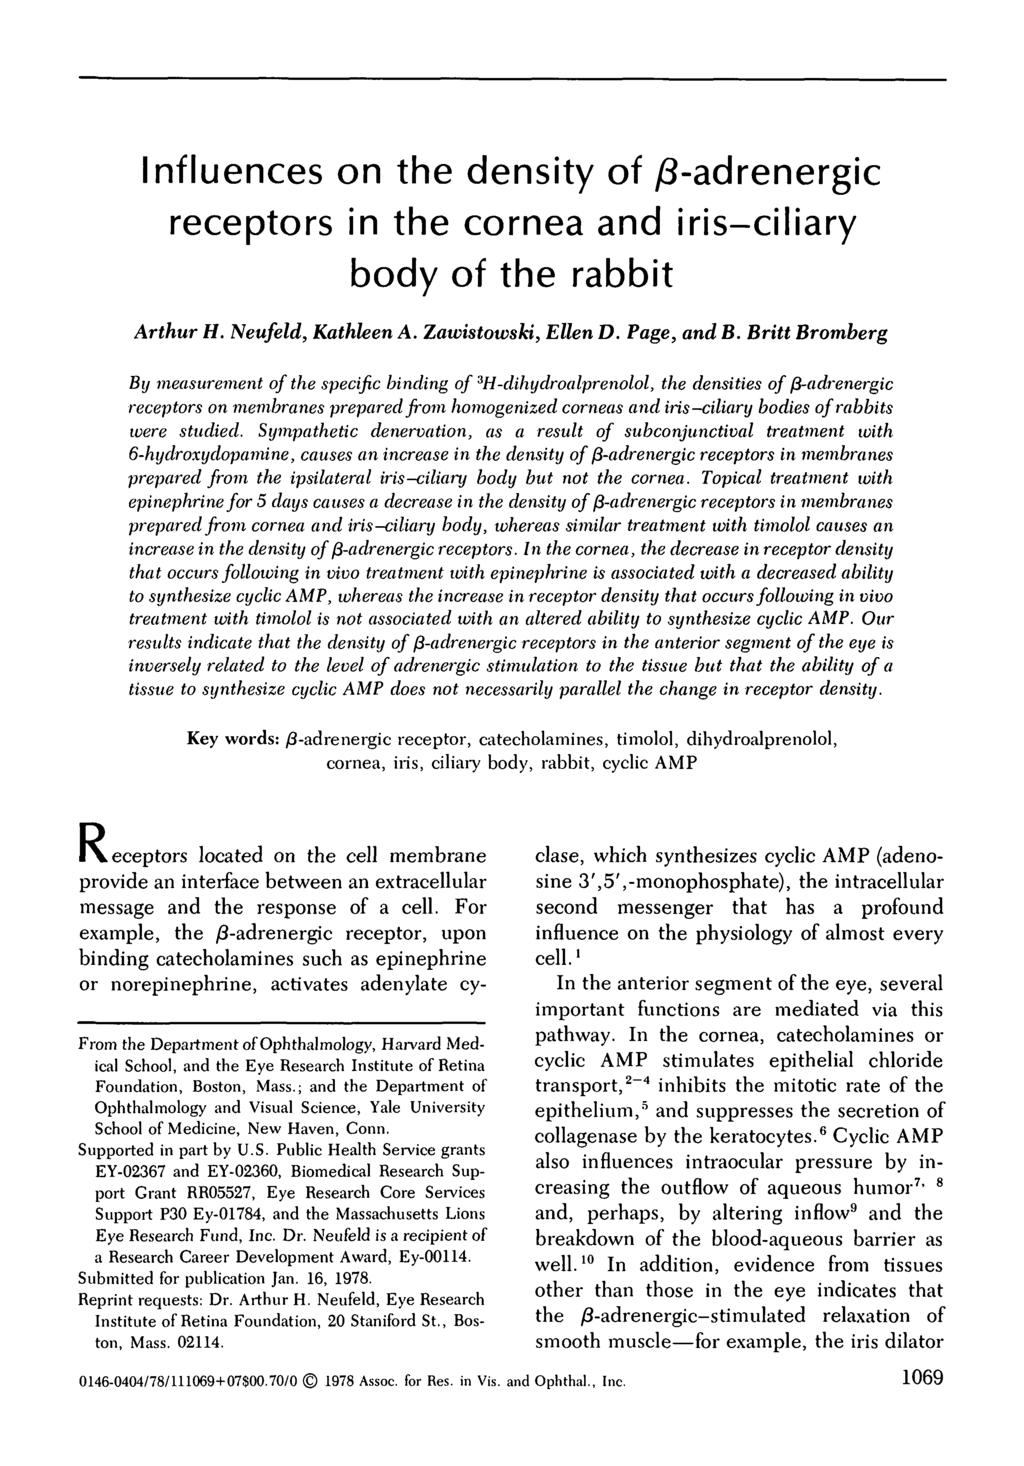 Influences on the density of /3-adrenergic receptors in the cornea and iris-ciliary body of the rabbit Arthur H. Neufeld, Kathleen A. Zatvistowski, Ellen D. Page, and B.